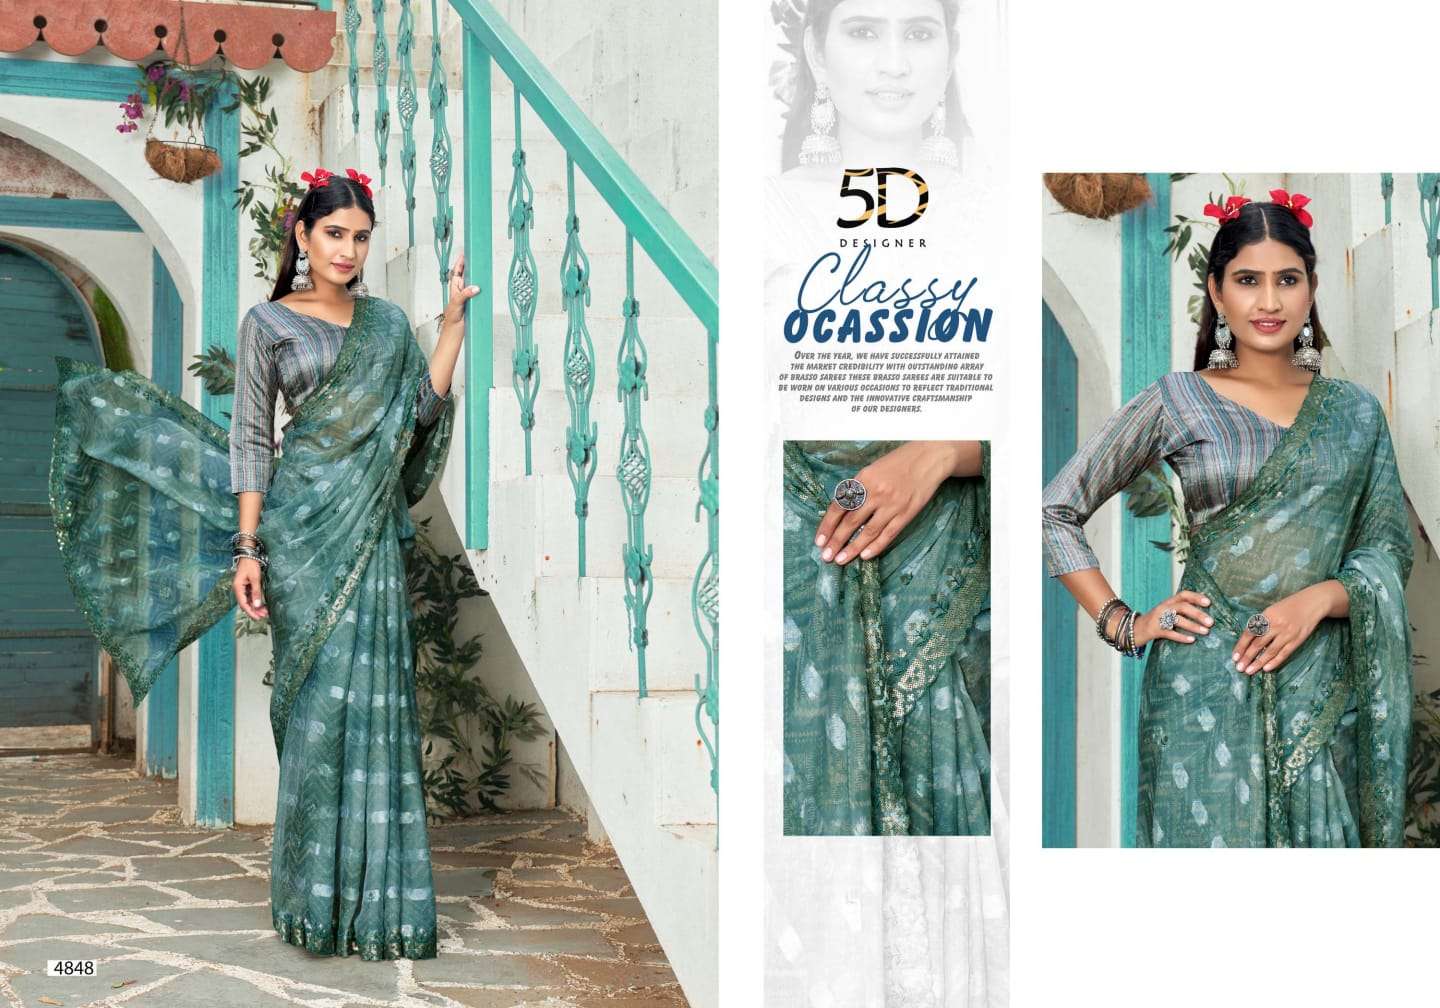 Madhuvan By 5D Designer Online Wholesaler Fancy Sarees